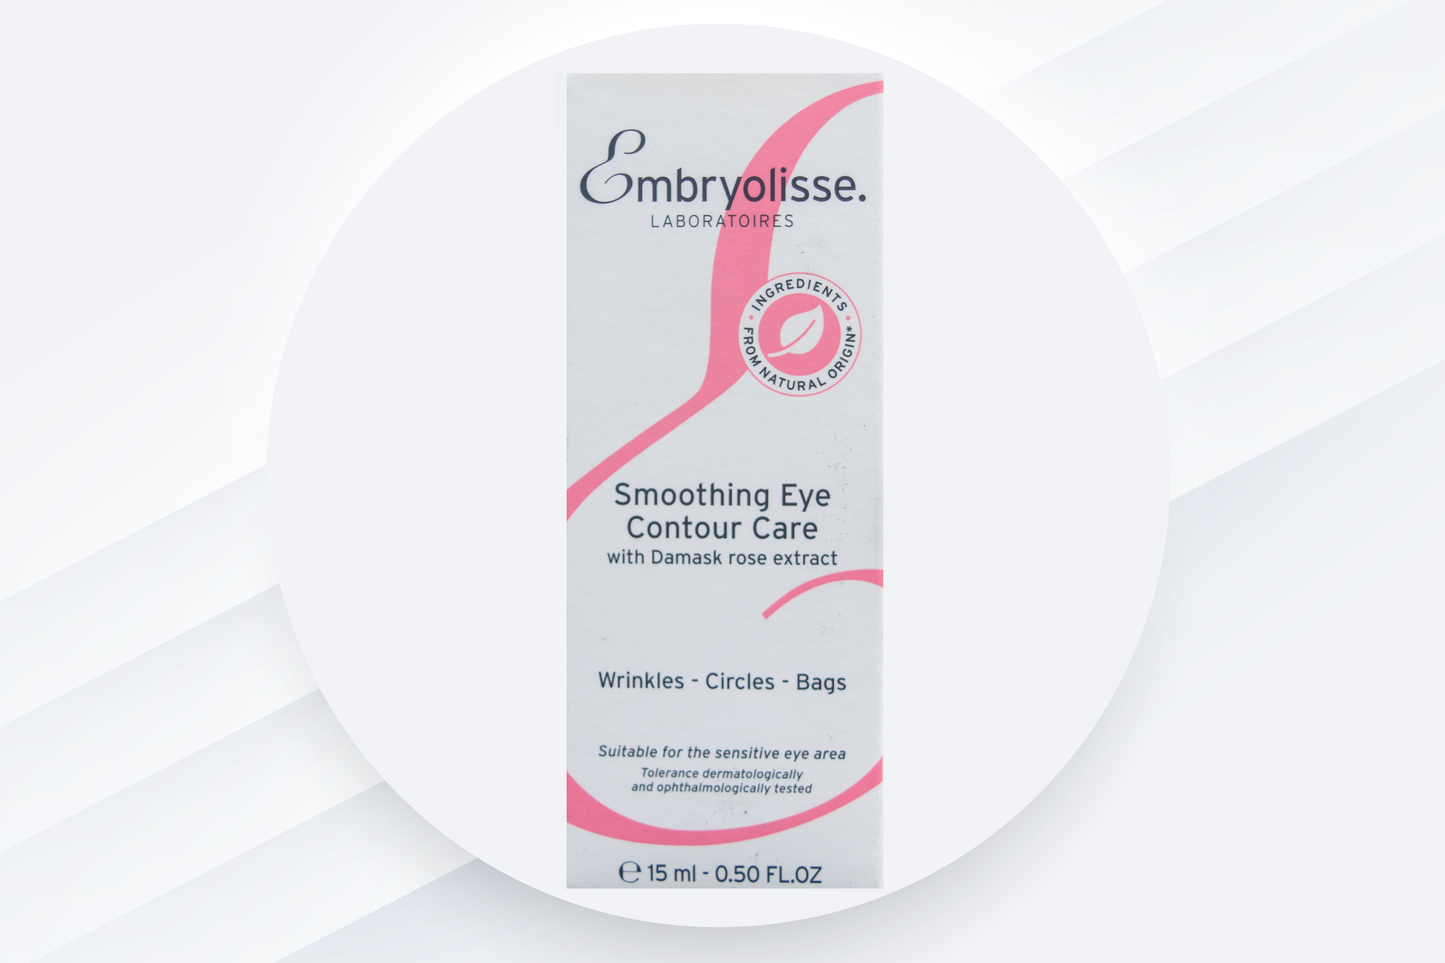 Embryolisse Smoothing Eye Contour Care